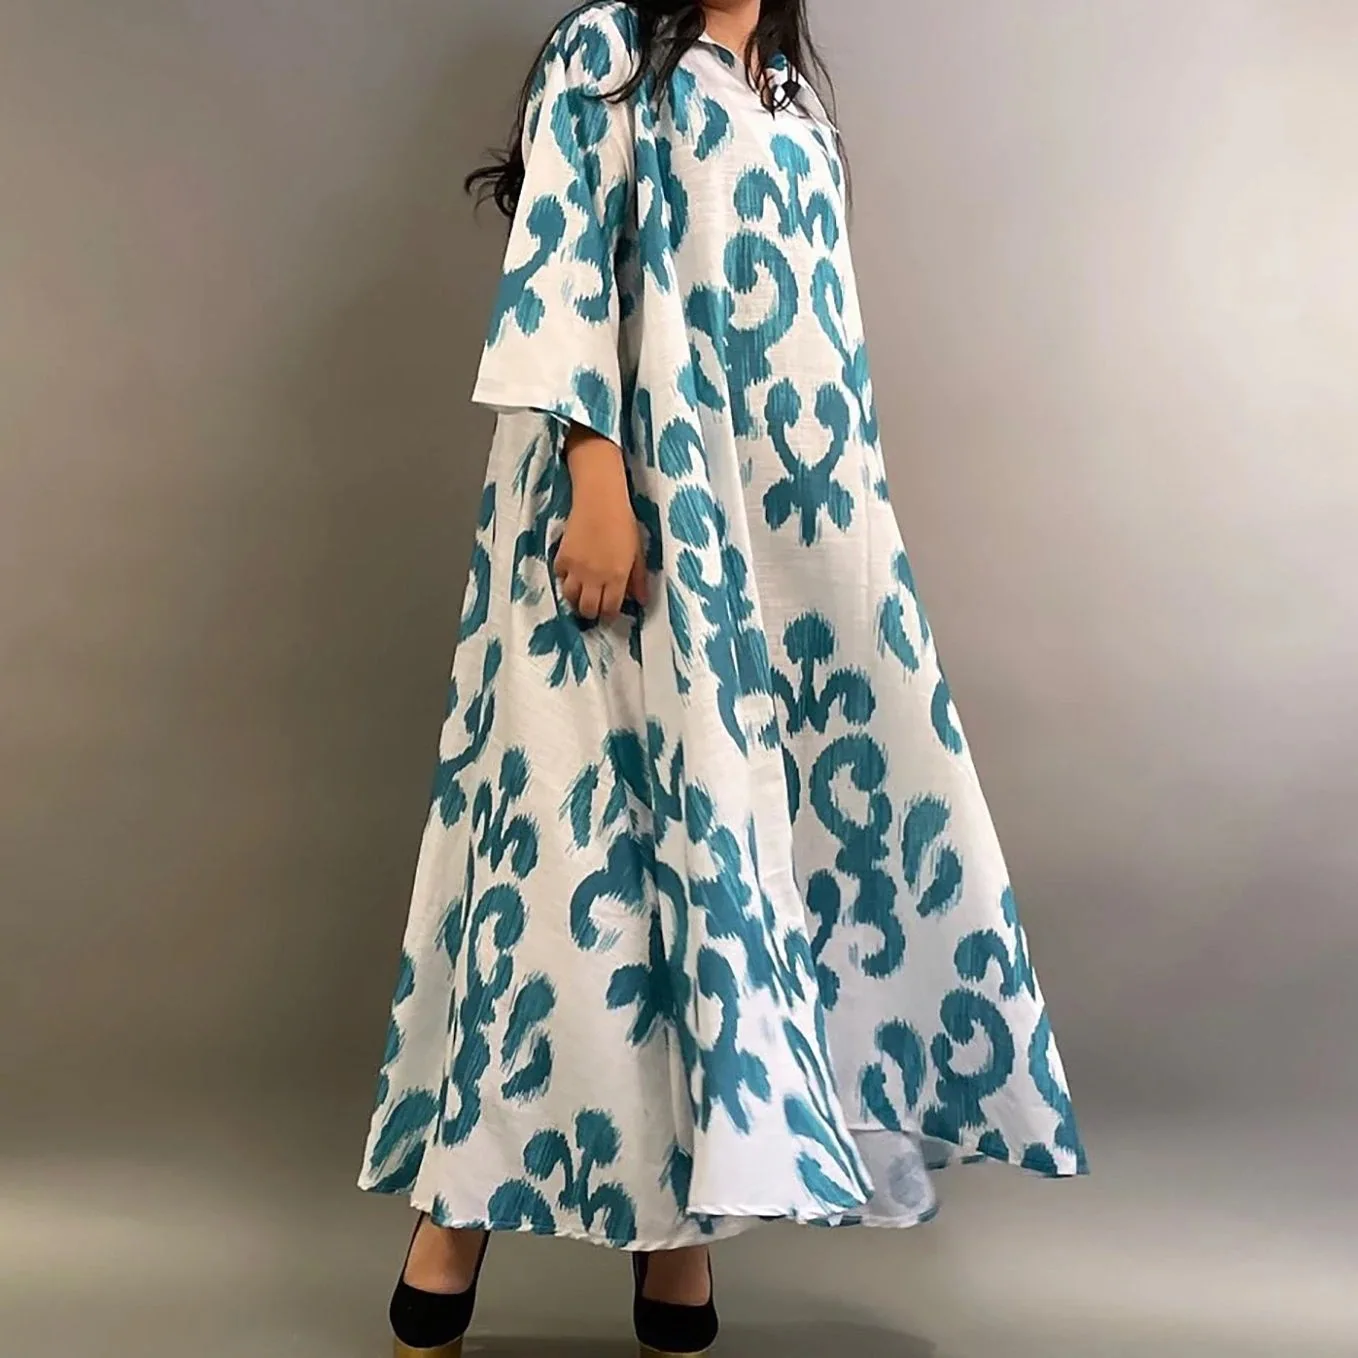 Caftan Marocain Abaya мусульманское платье, Женский кафтан с большим разрезом, Рамадан, хиджаб Djellaba, весна 2022, Jilbab кимоно, женское платье